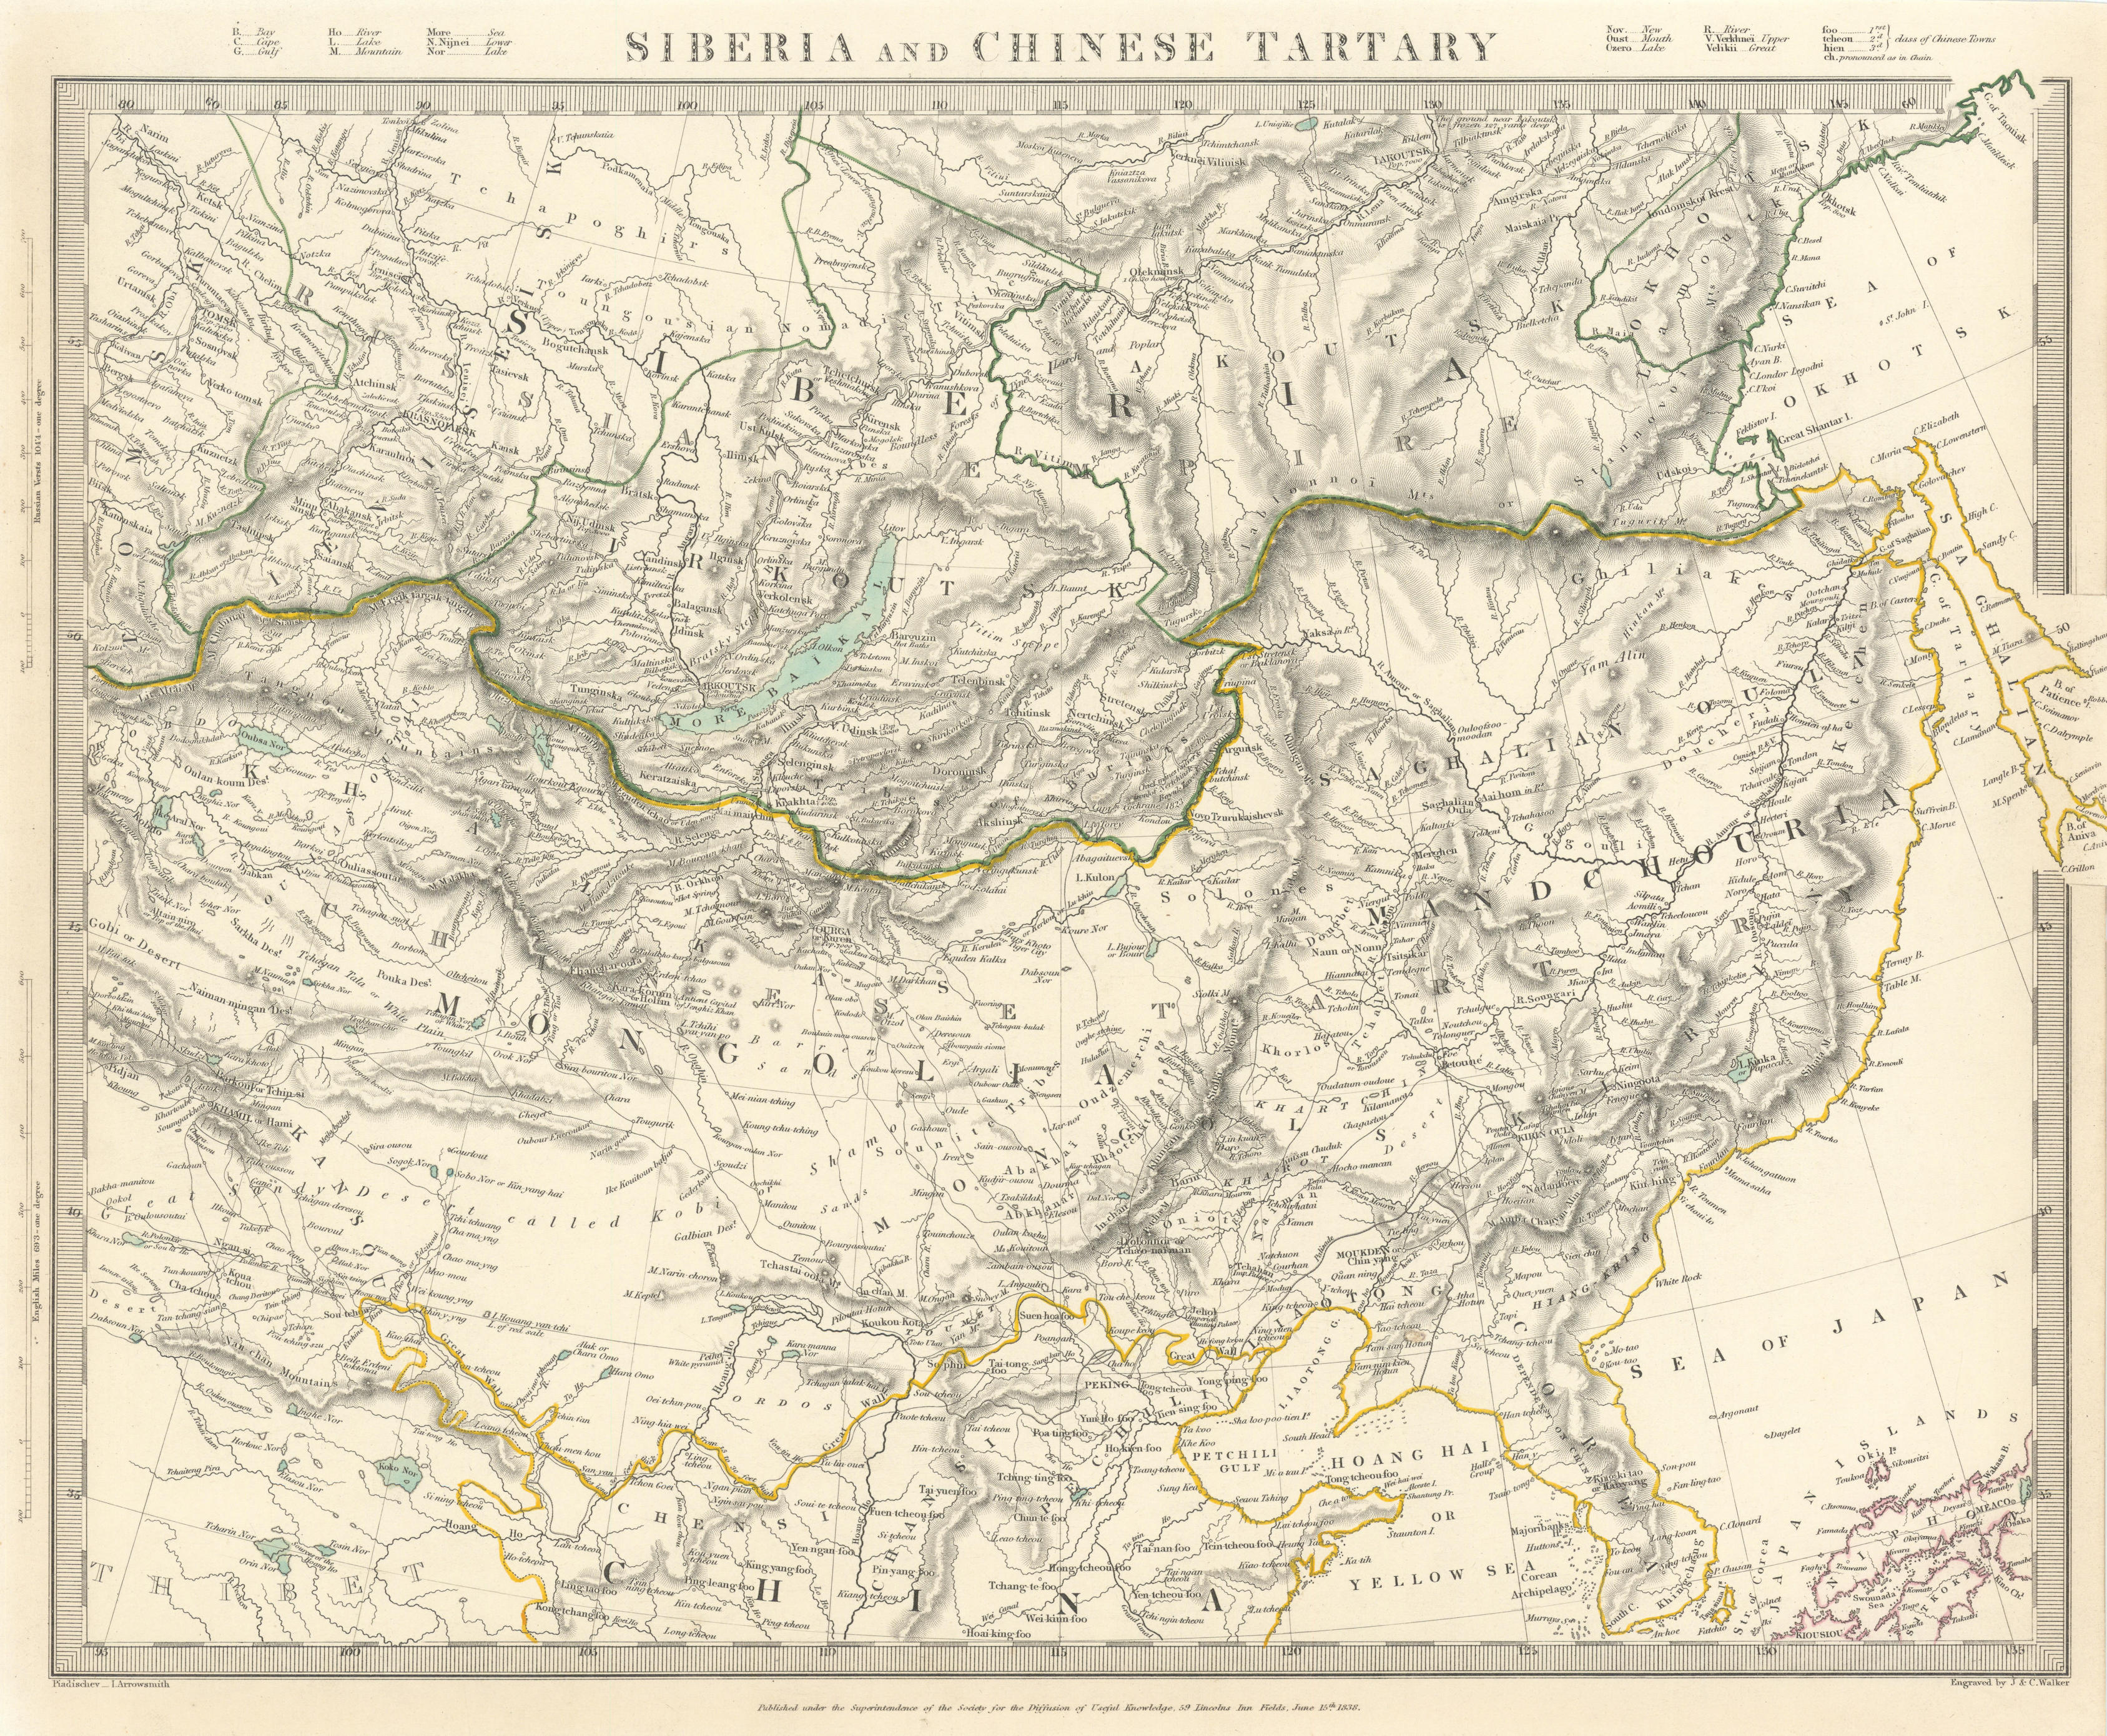 Associate Product SIBERIA AND CHINESE TARTARY. Manchuria Mongolia Korea China. SDUK 1844 old map